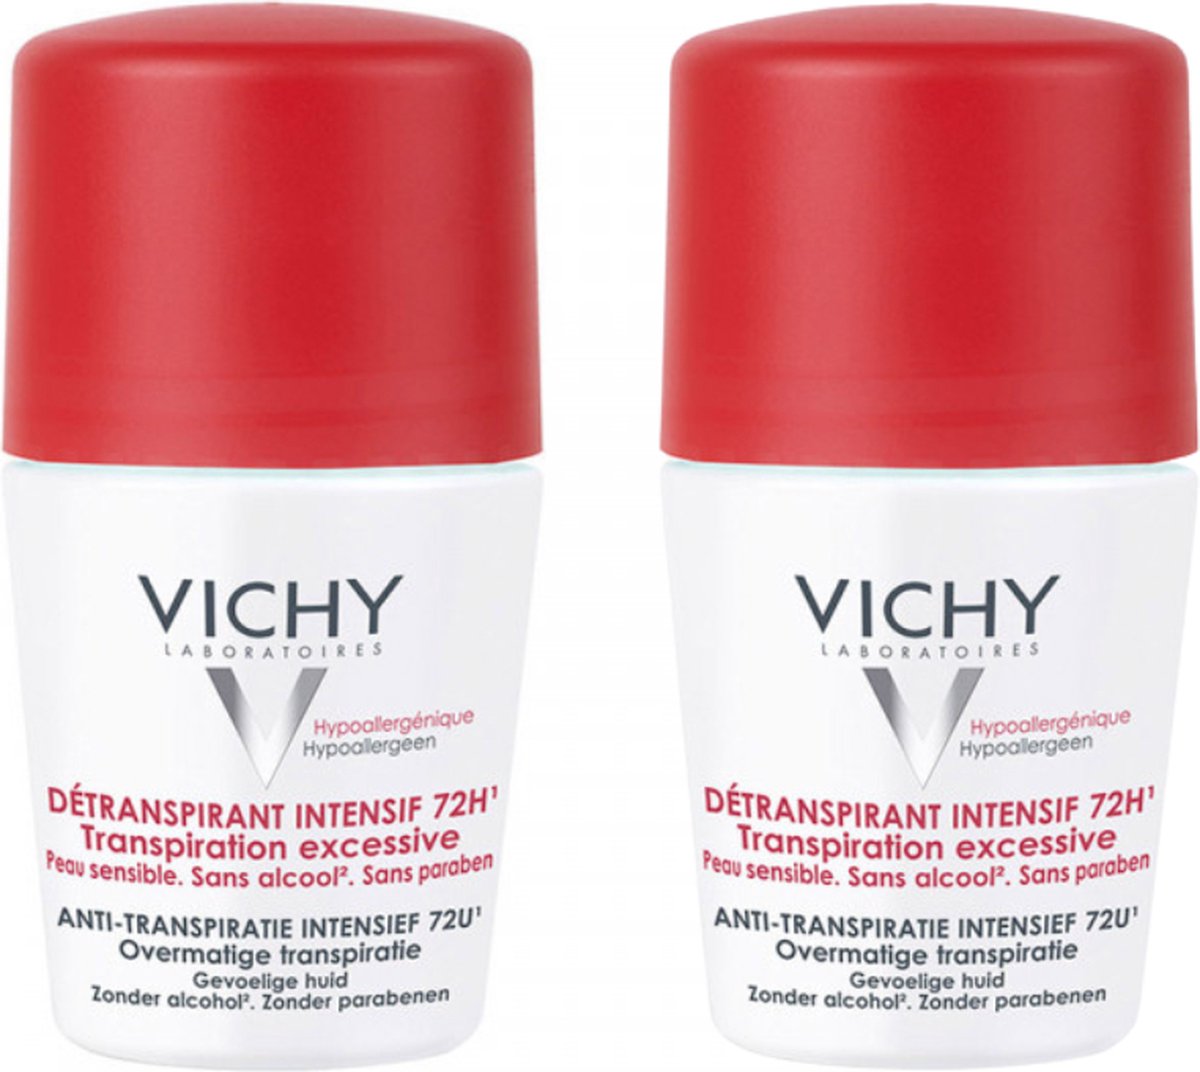 Vichy Deo stress resist 72h - VICHY